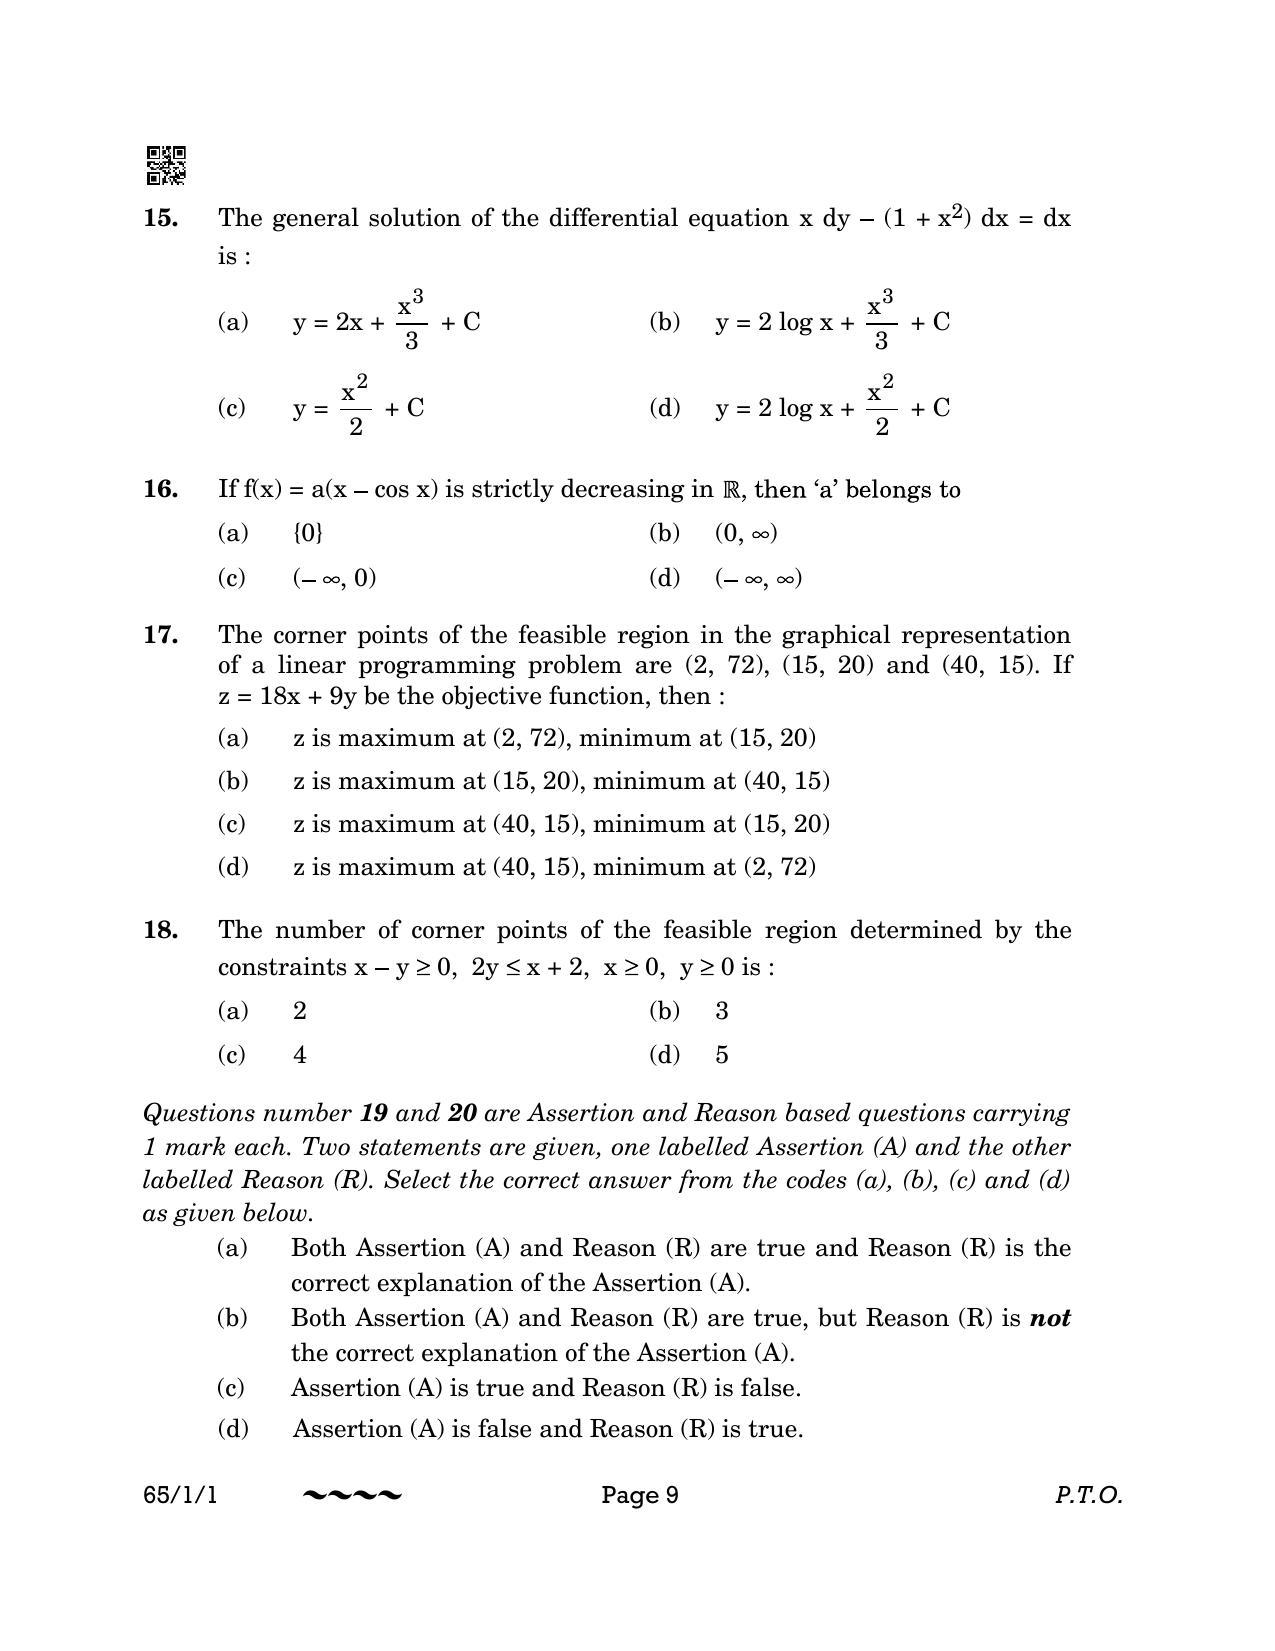 CBSE Class 12 65-1-1 MATHEMATICS 2023 Question Paper - Page 9